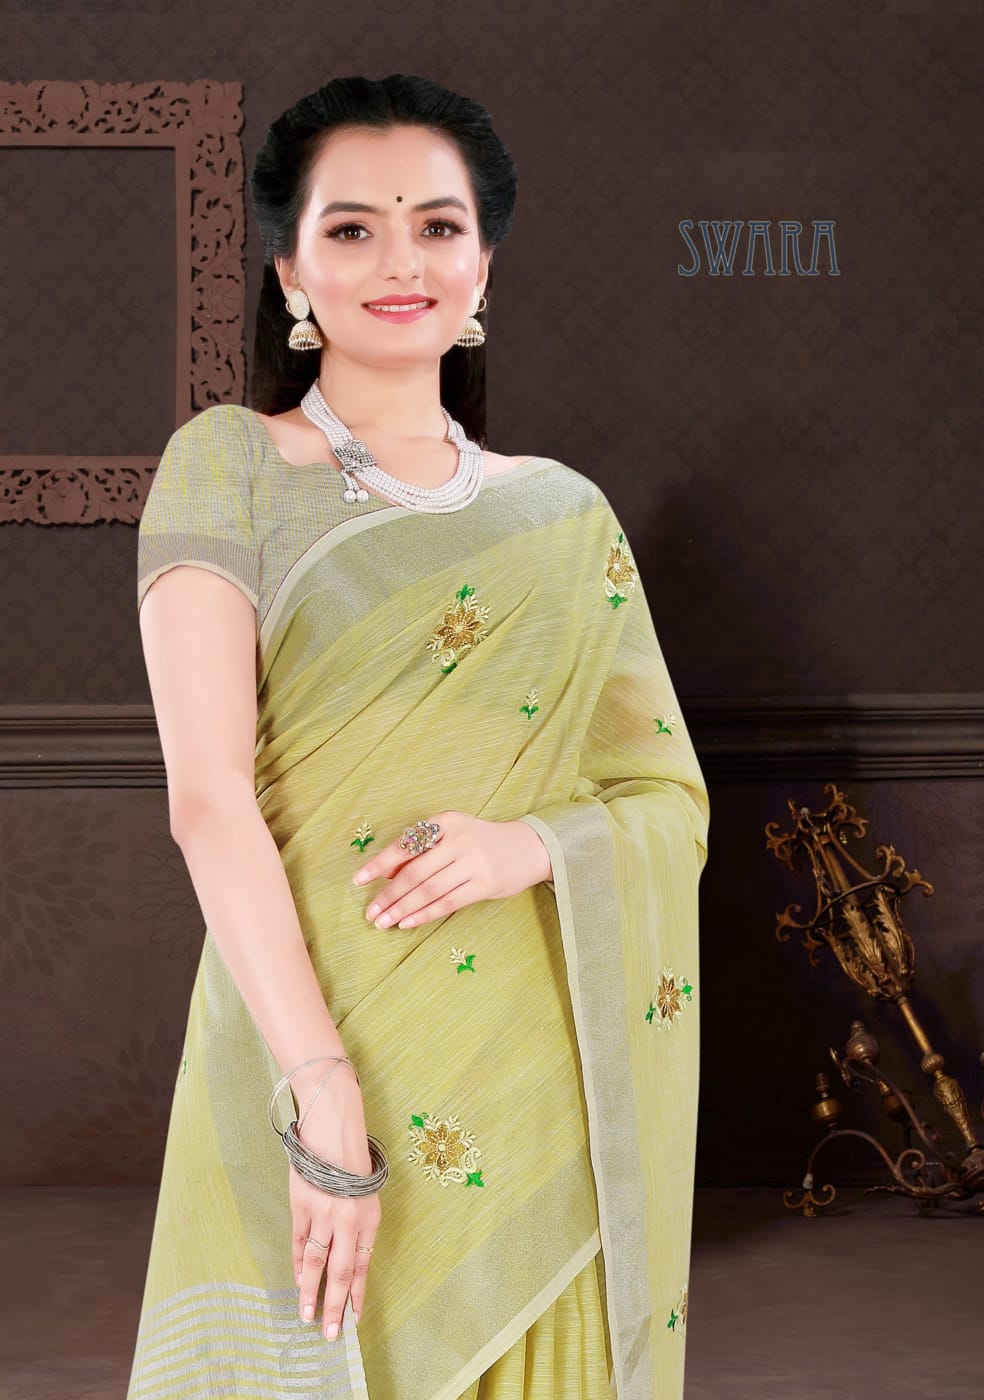 Balaji Emporium Presents Swara 3001-3006 Series Linen Embroidery Work Sarees Collection At Wholesale Price 104